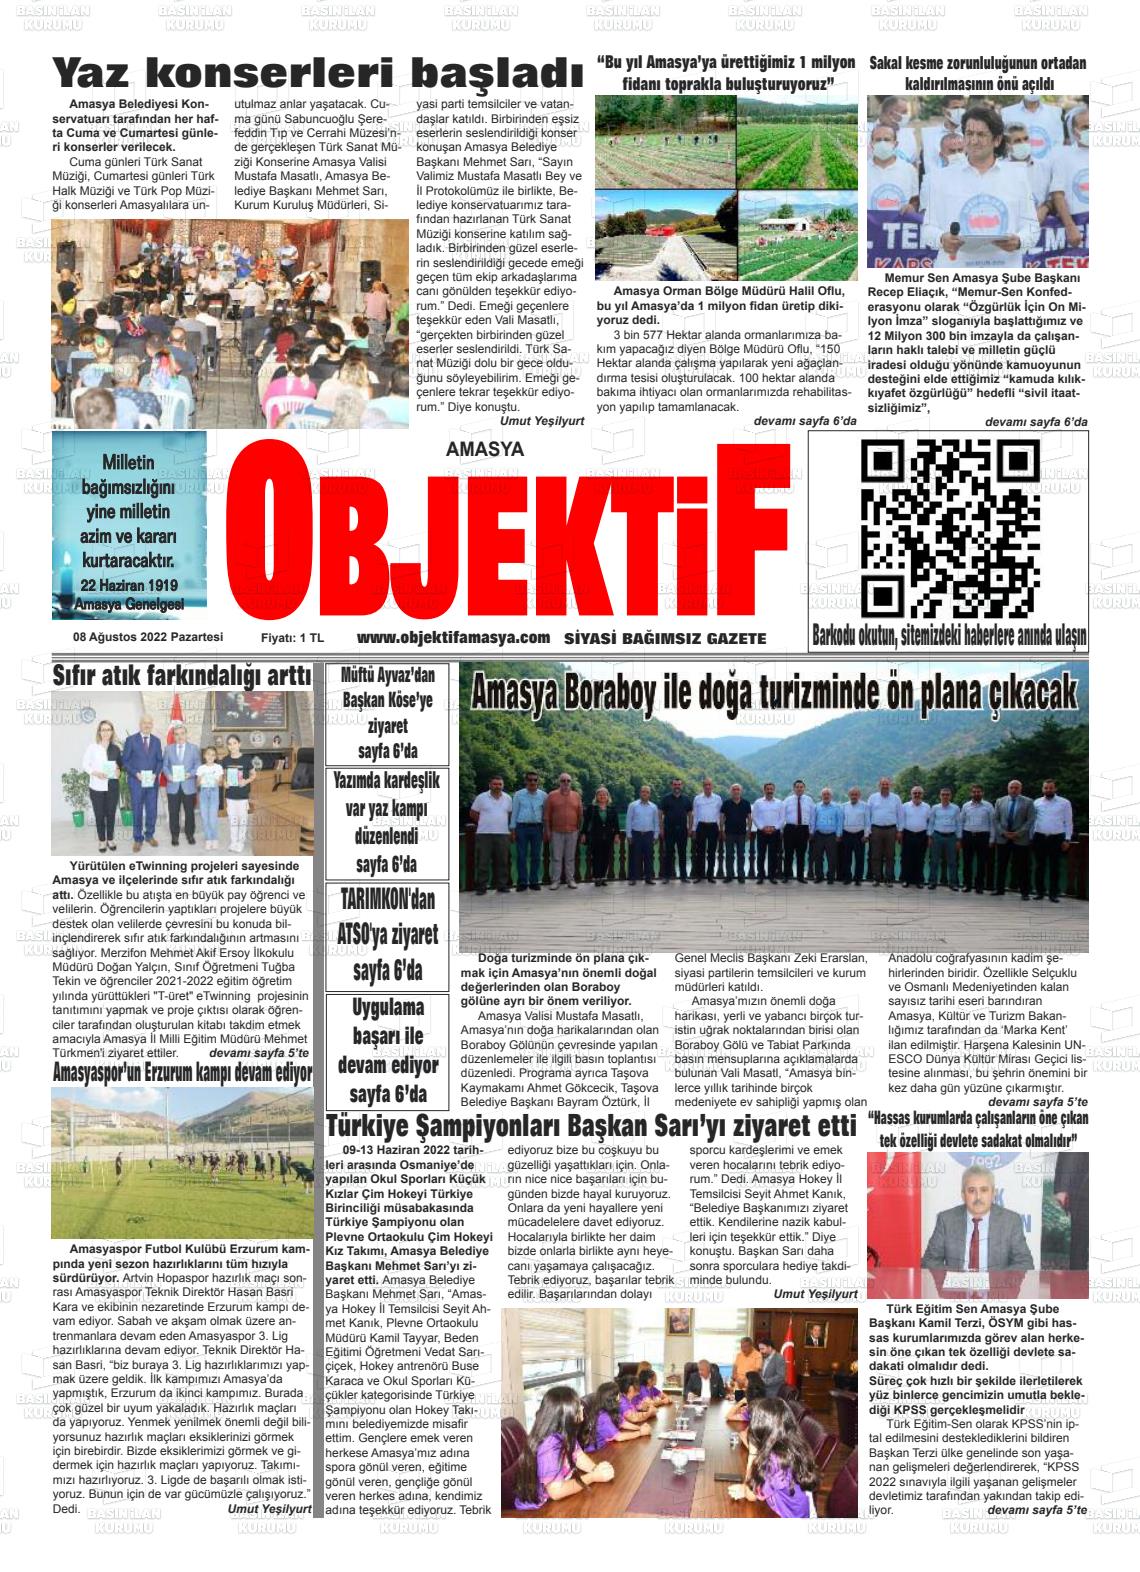 08 Ağustos 2022 Amasya Objektif Gazete Manşeti